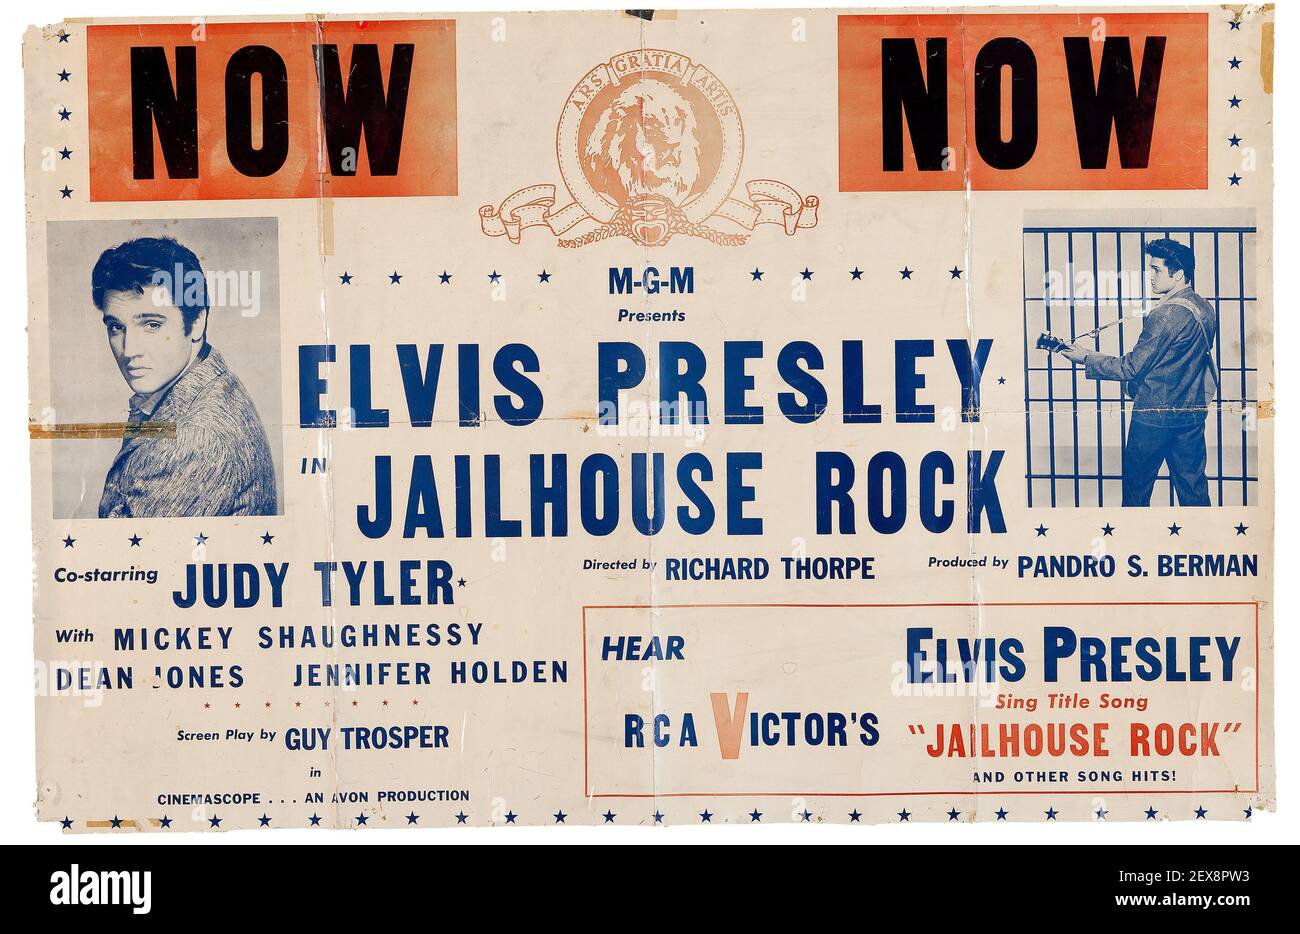 JETZT! Elvis Presley, Jailhouse Rock. Werbung. Stockfoto